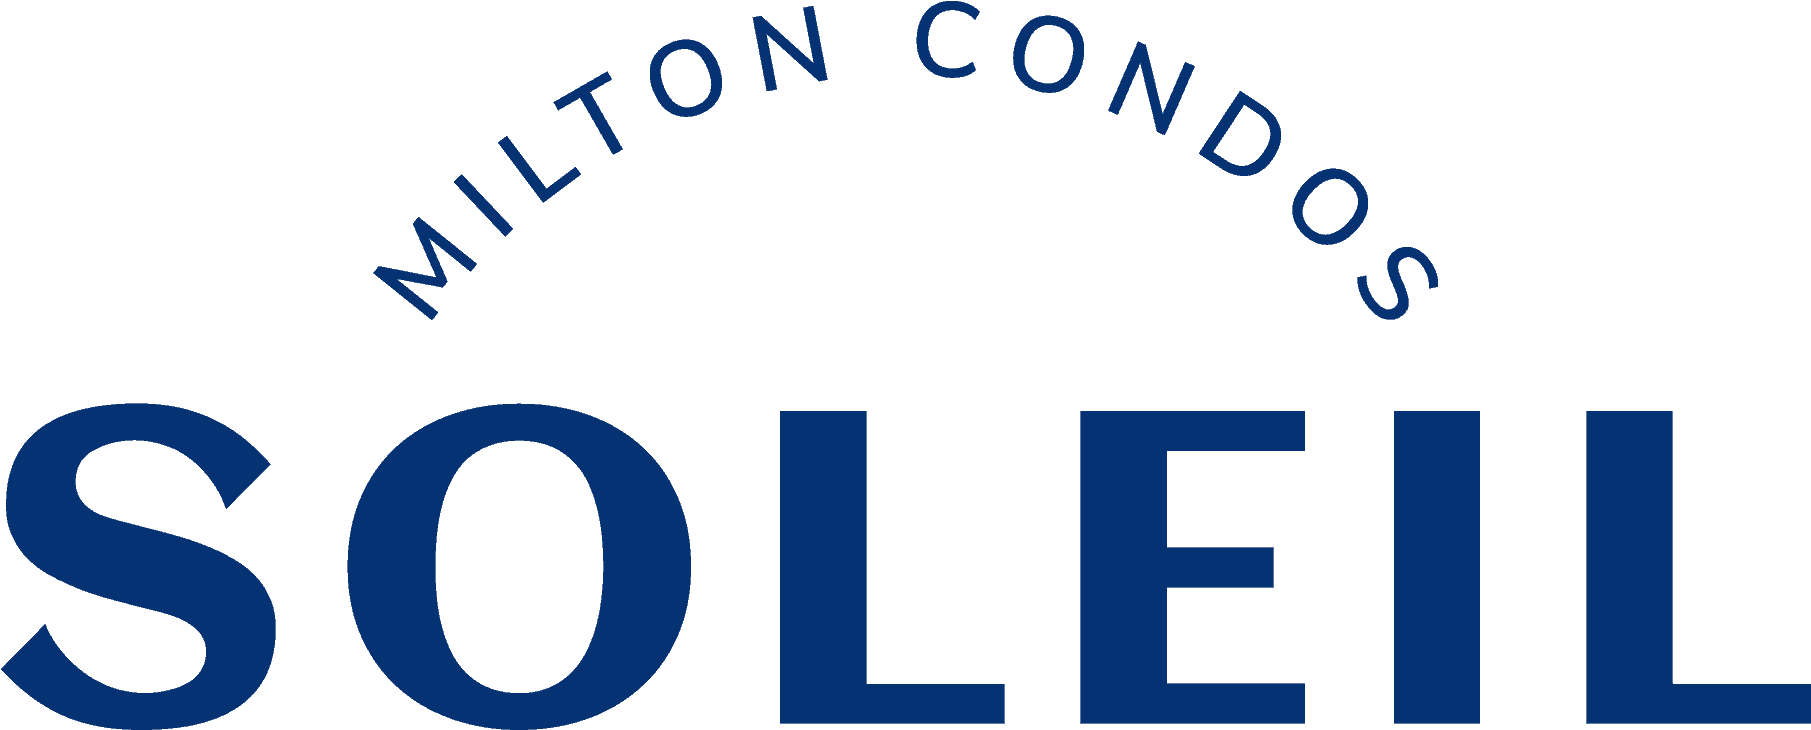 Mattamy Soleil Condos Logo